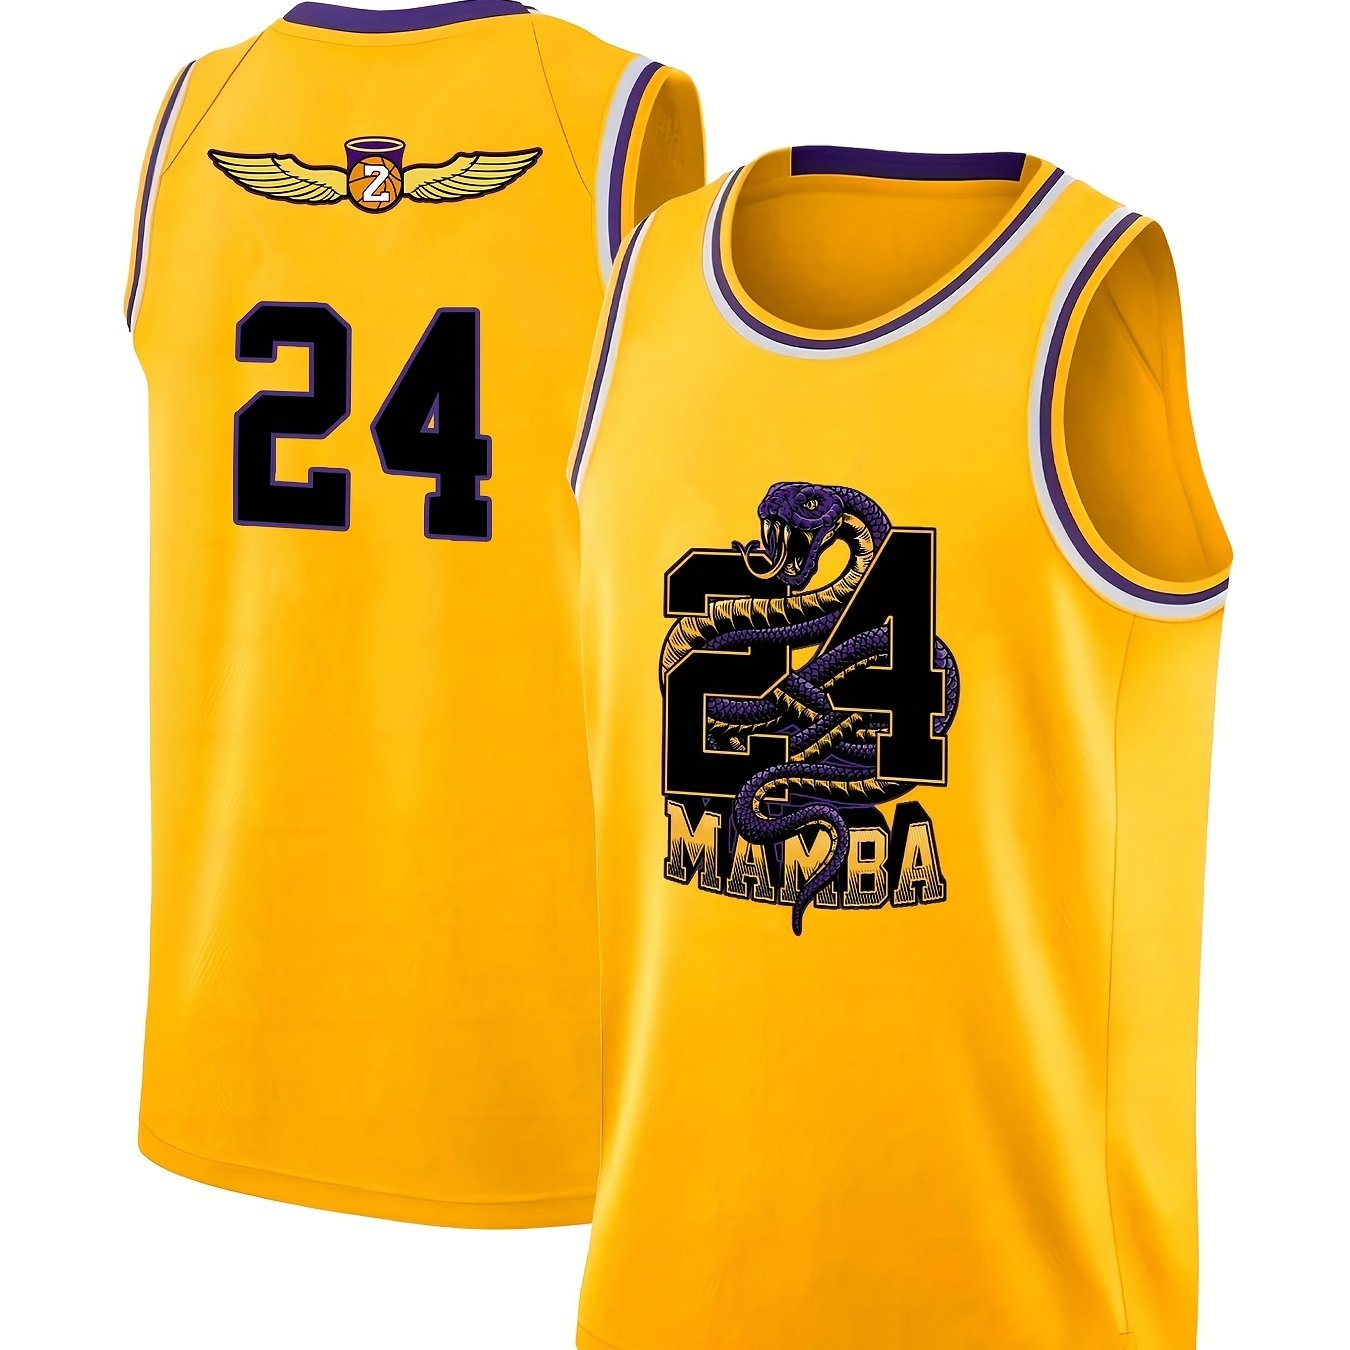 Men's Mamba #24 Embroidered Basketball Jersey, Active Retro Round Neck Sleeveless Uniform Basketball Shirt for Training CompetitionSize S-XXXL,Temu